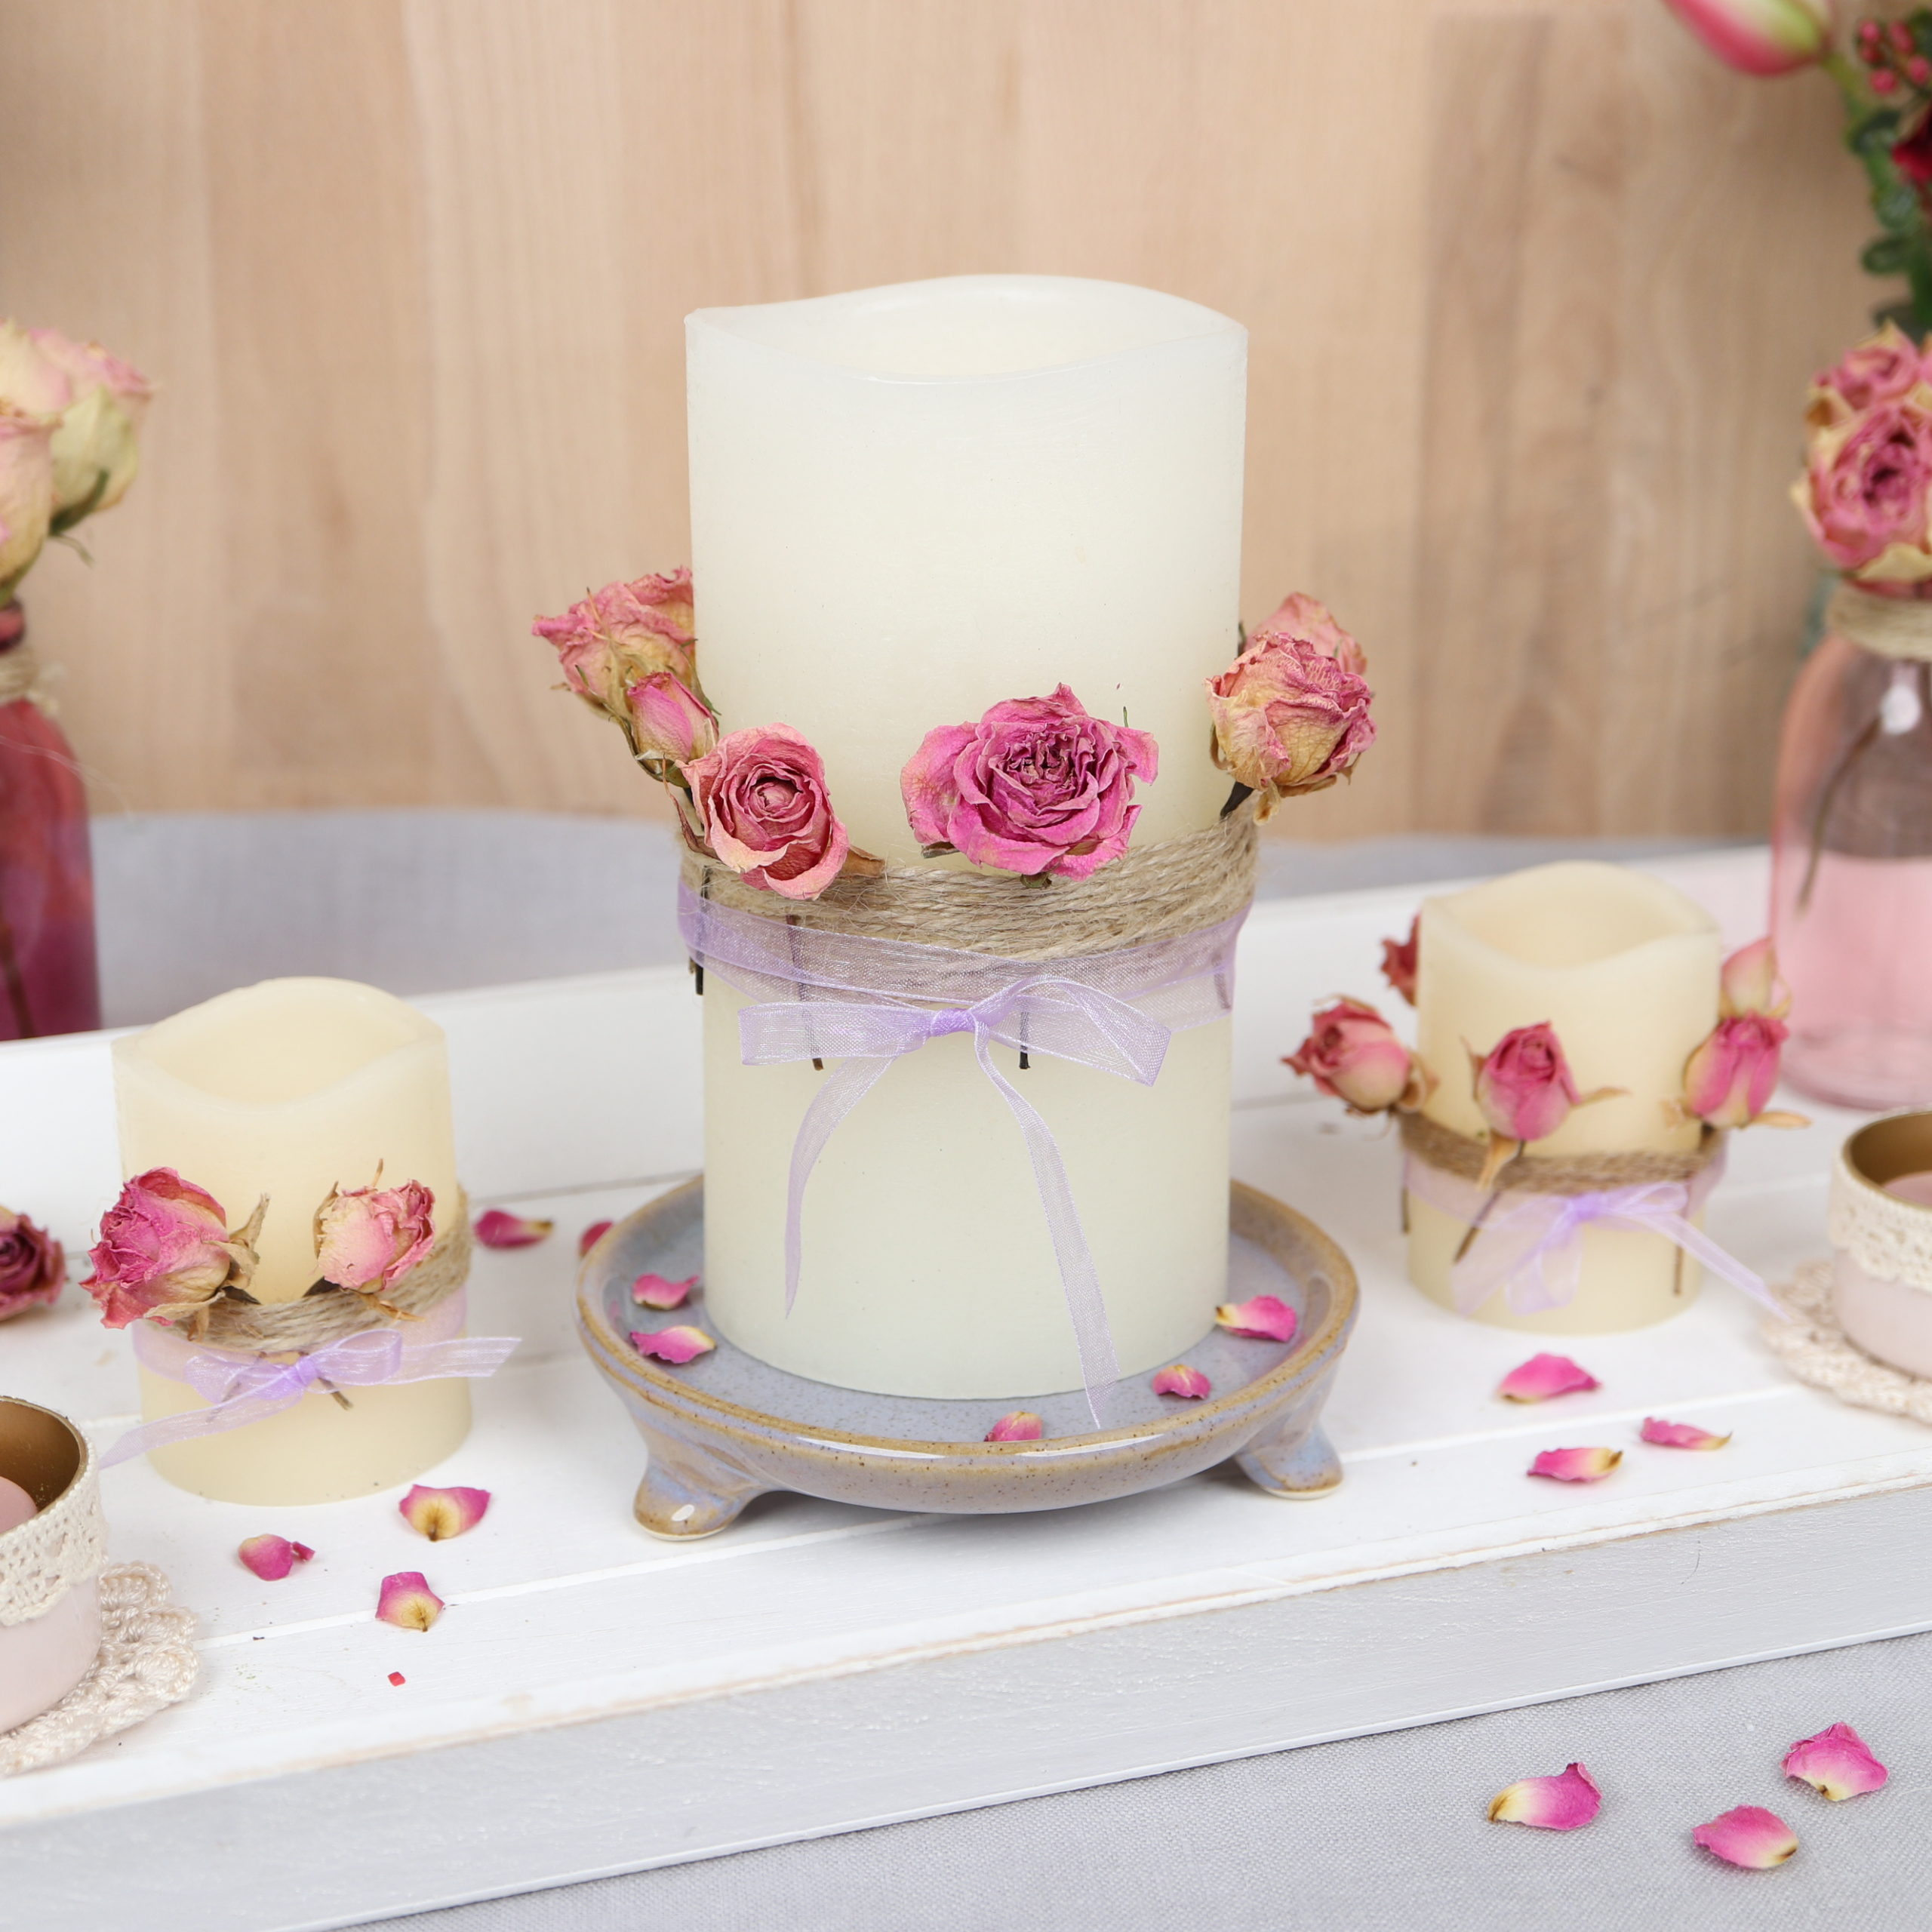 DIY | LED-Kerze dekorieren: Romantische Kerzendeko mit getrockneten Rosen